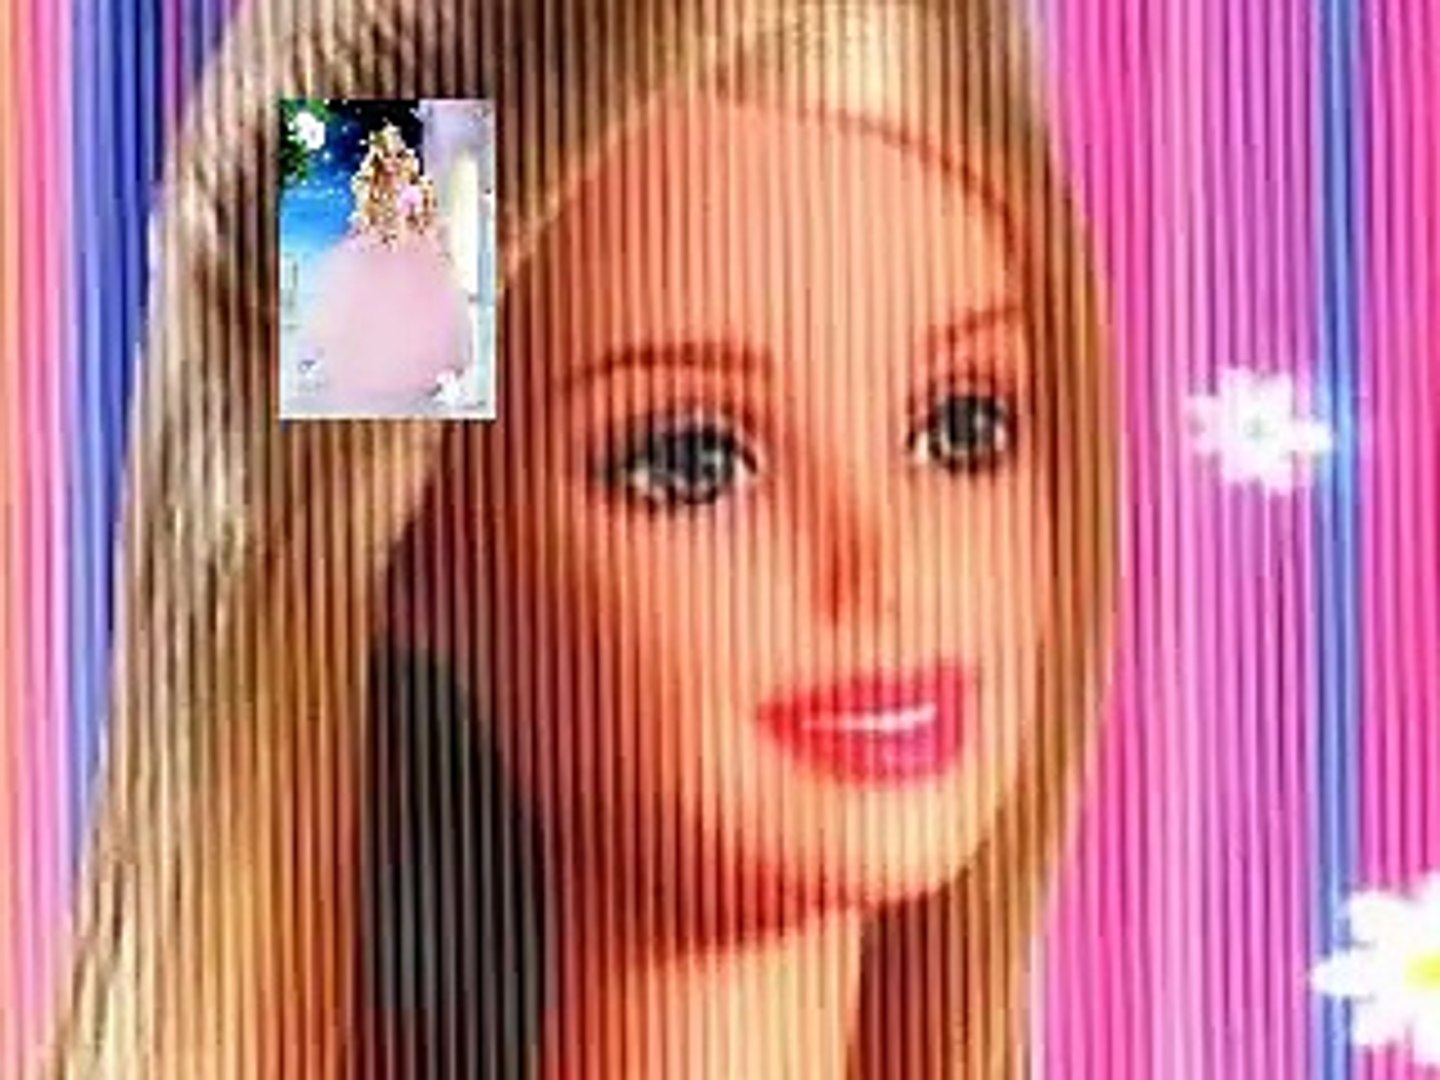 Barbie Girl Aqua Techno Version - Dailymotion Video